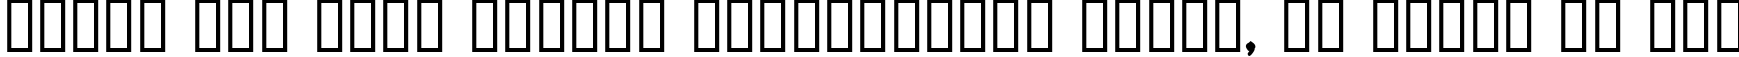 Пример написания шрифтом Cuomotype текста на русском